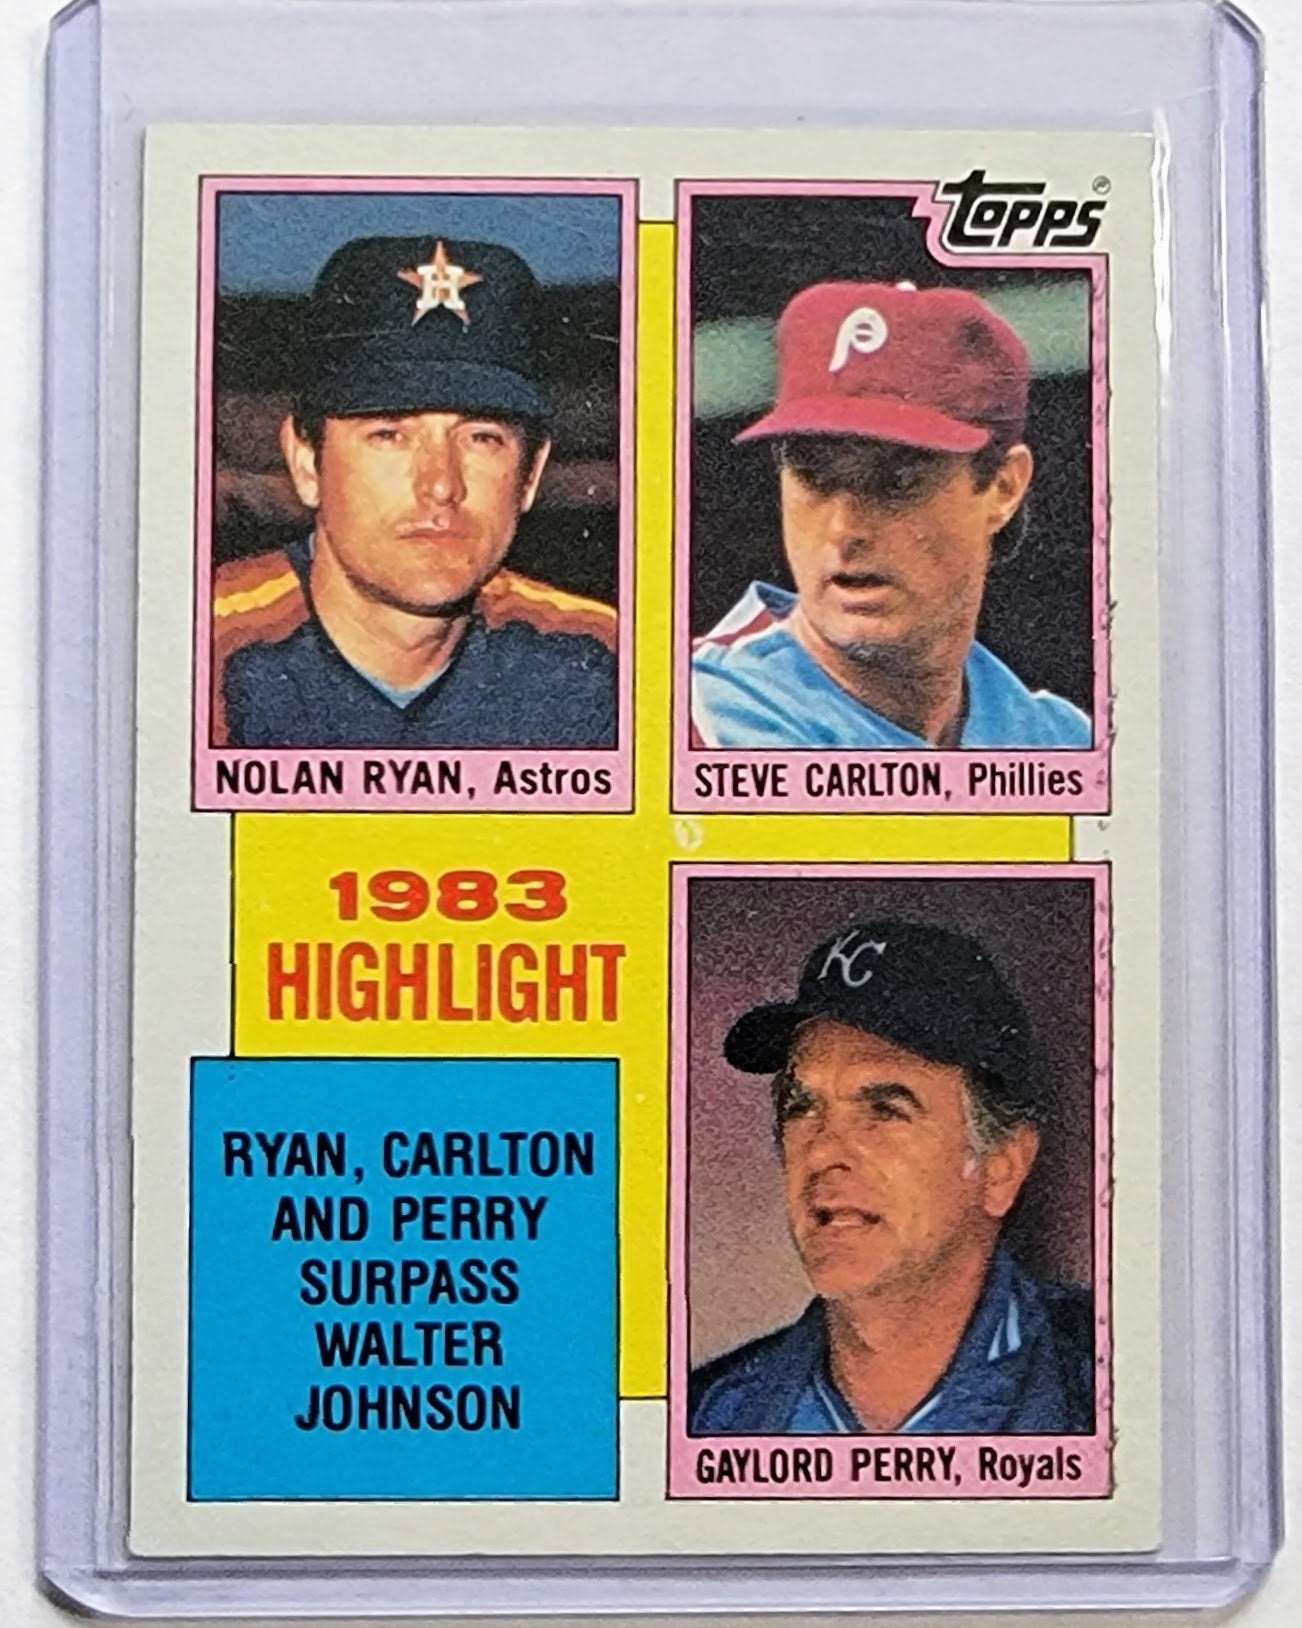 1984 Topps Nolan Ryan, Steve Carlton & Gaylord Perry 1983 Highlights Baseball Trading Card, 1ea TPTV simple Xclusive Collectibles   